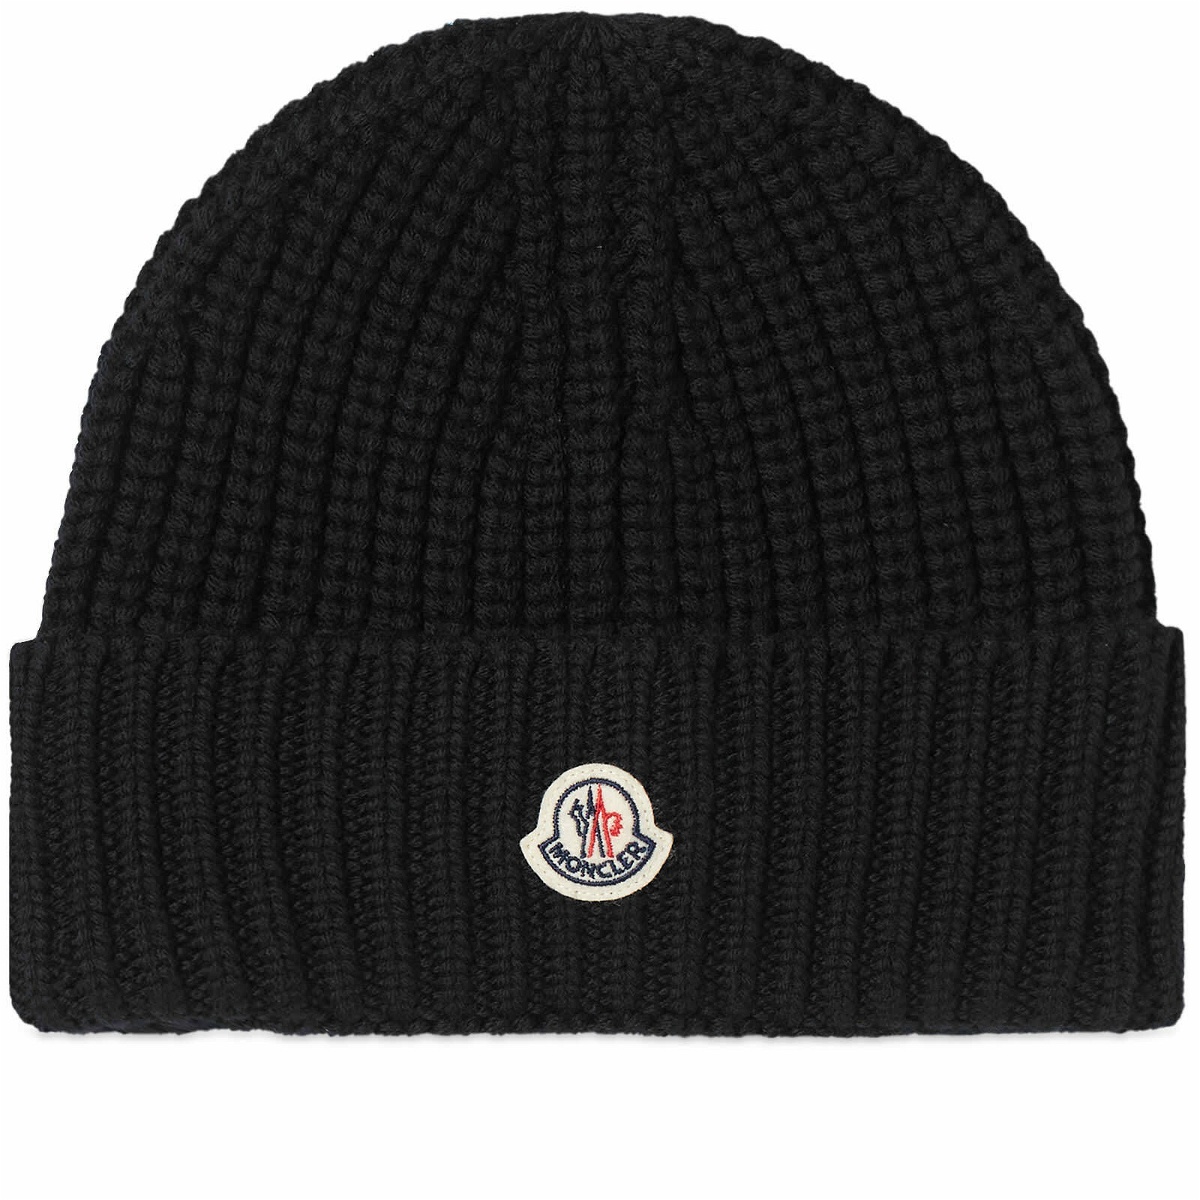 Moncler Women's Logo Beanie Hat in Black Moncler